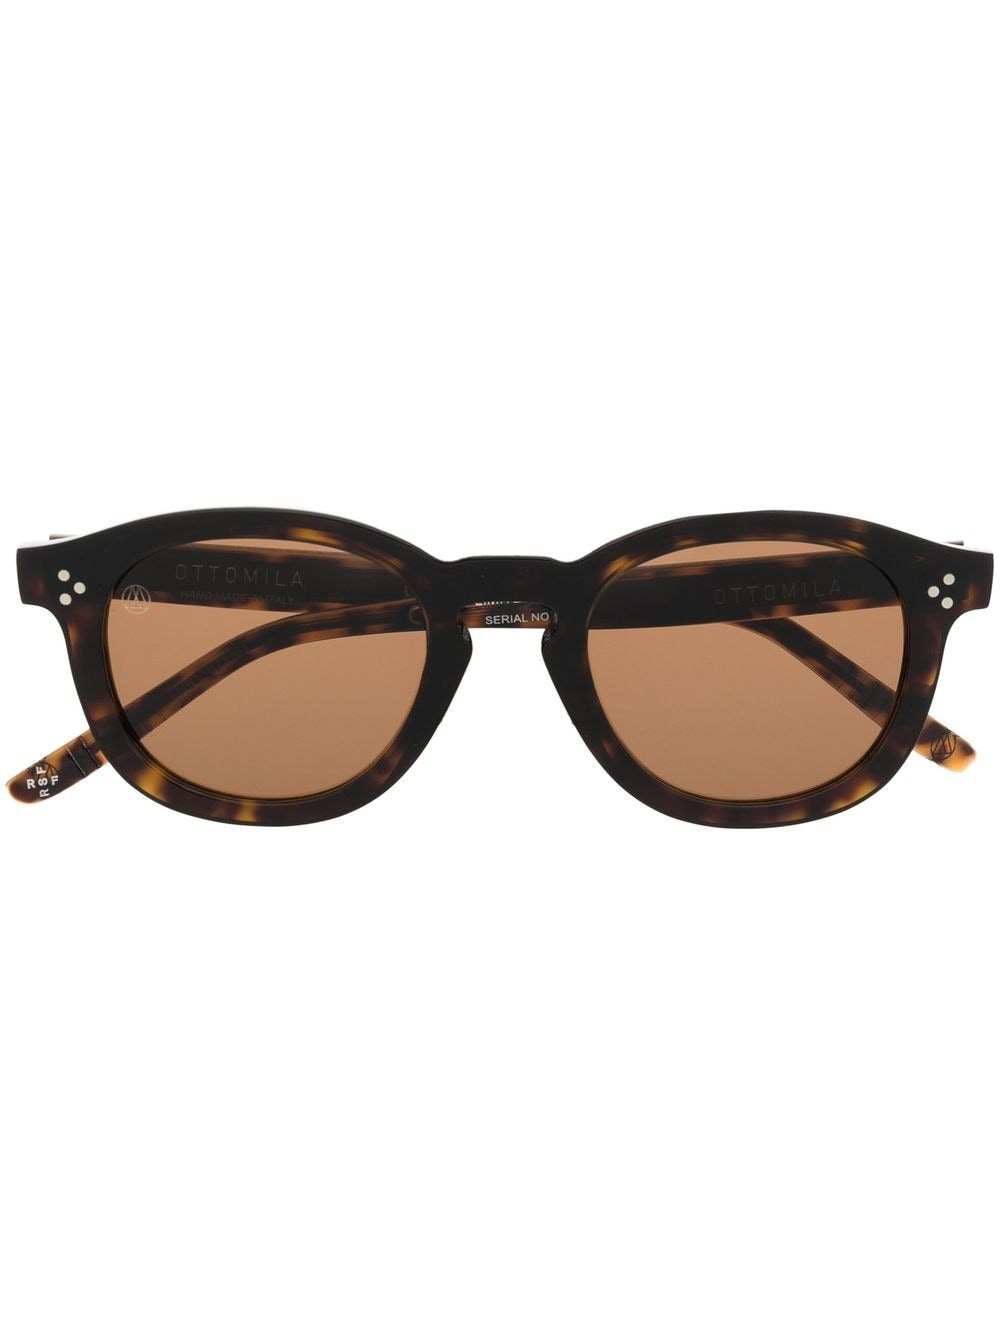 Retrosuperfuture x Ottomila Ombra round-frame sunglasses - Brown von Retrosuperfuture